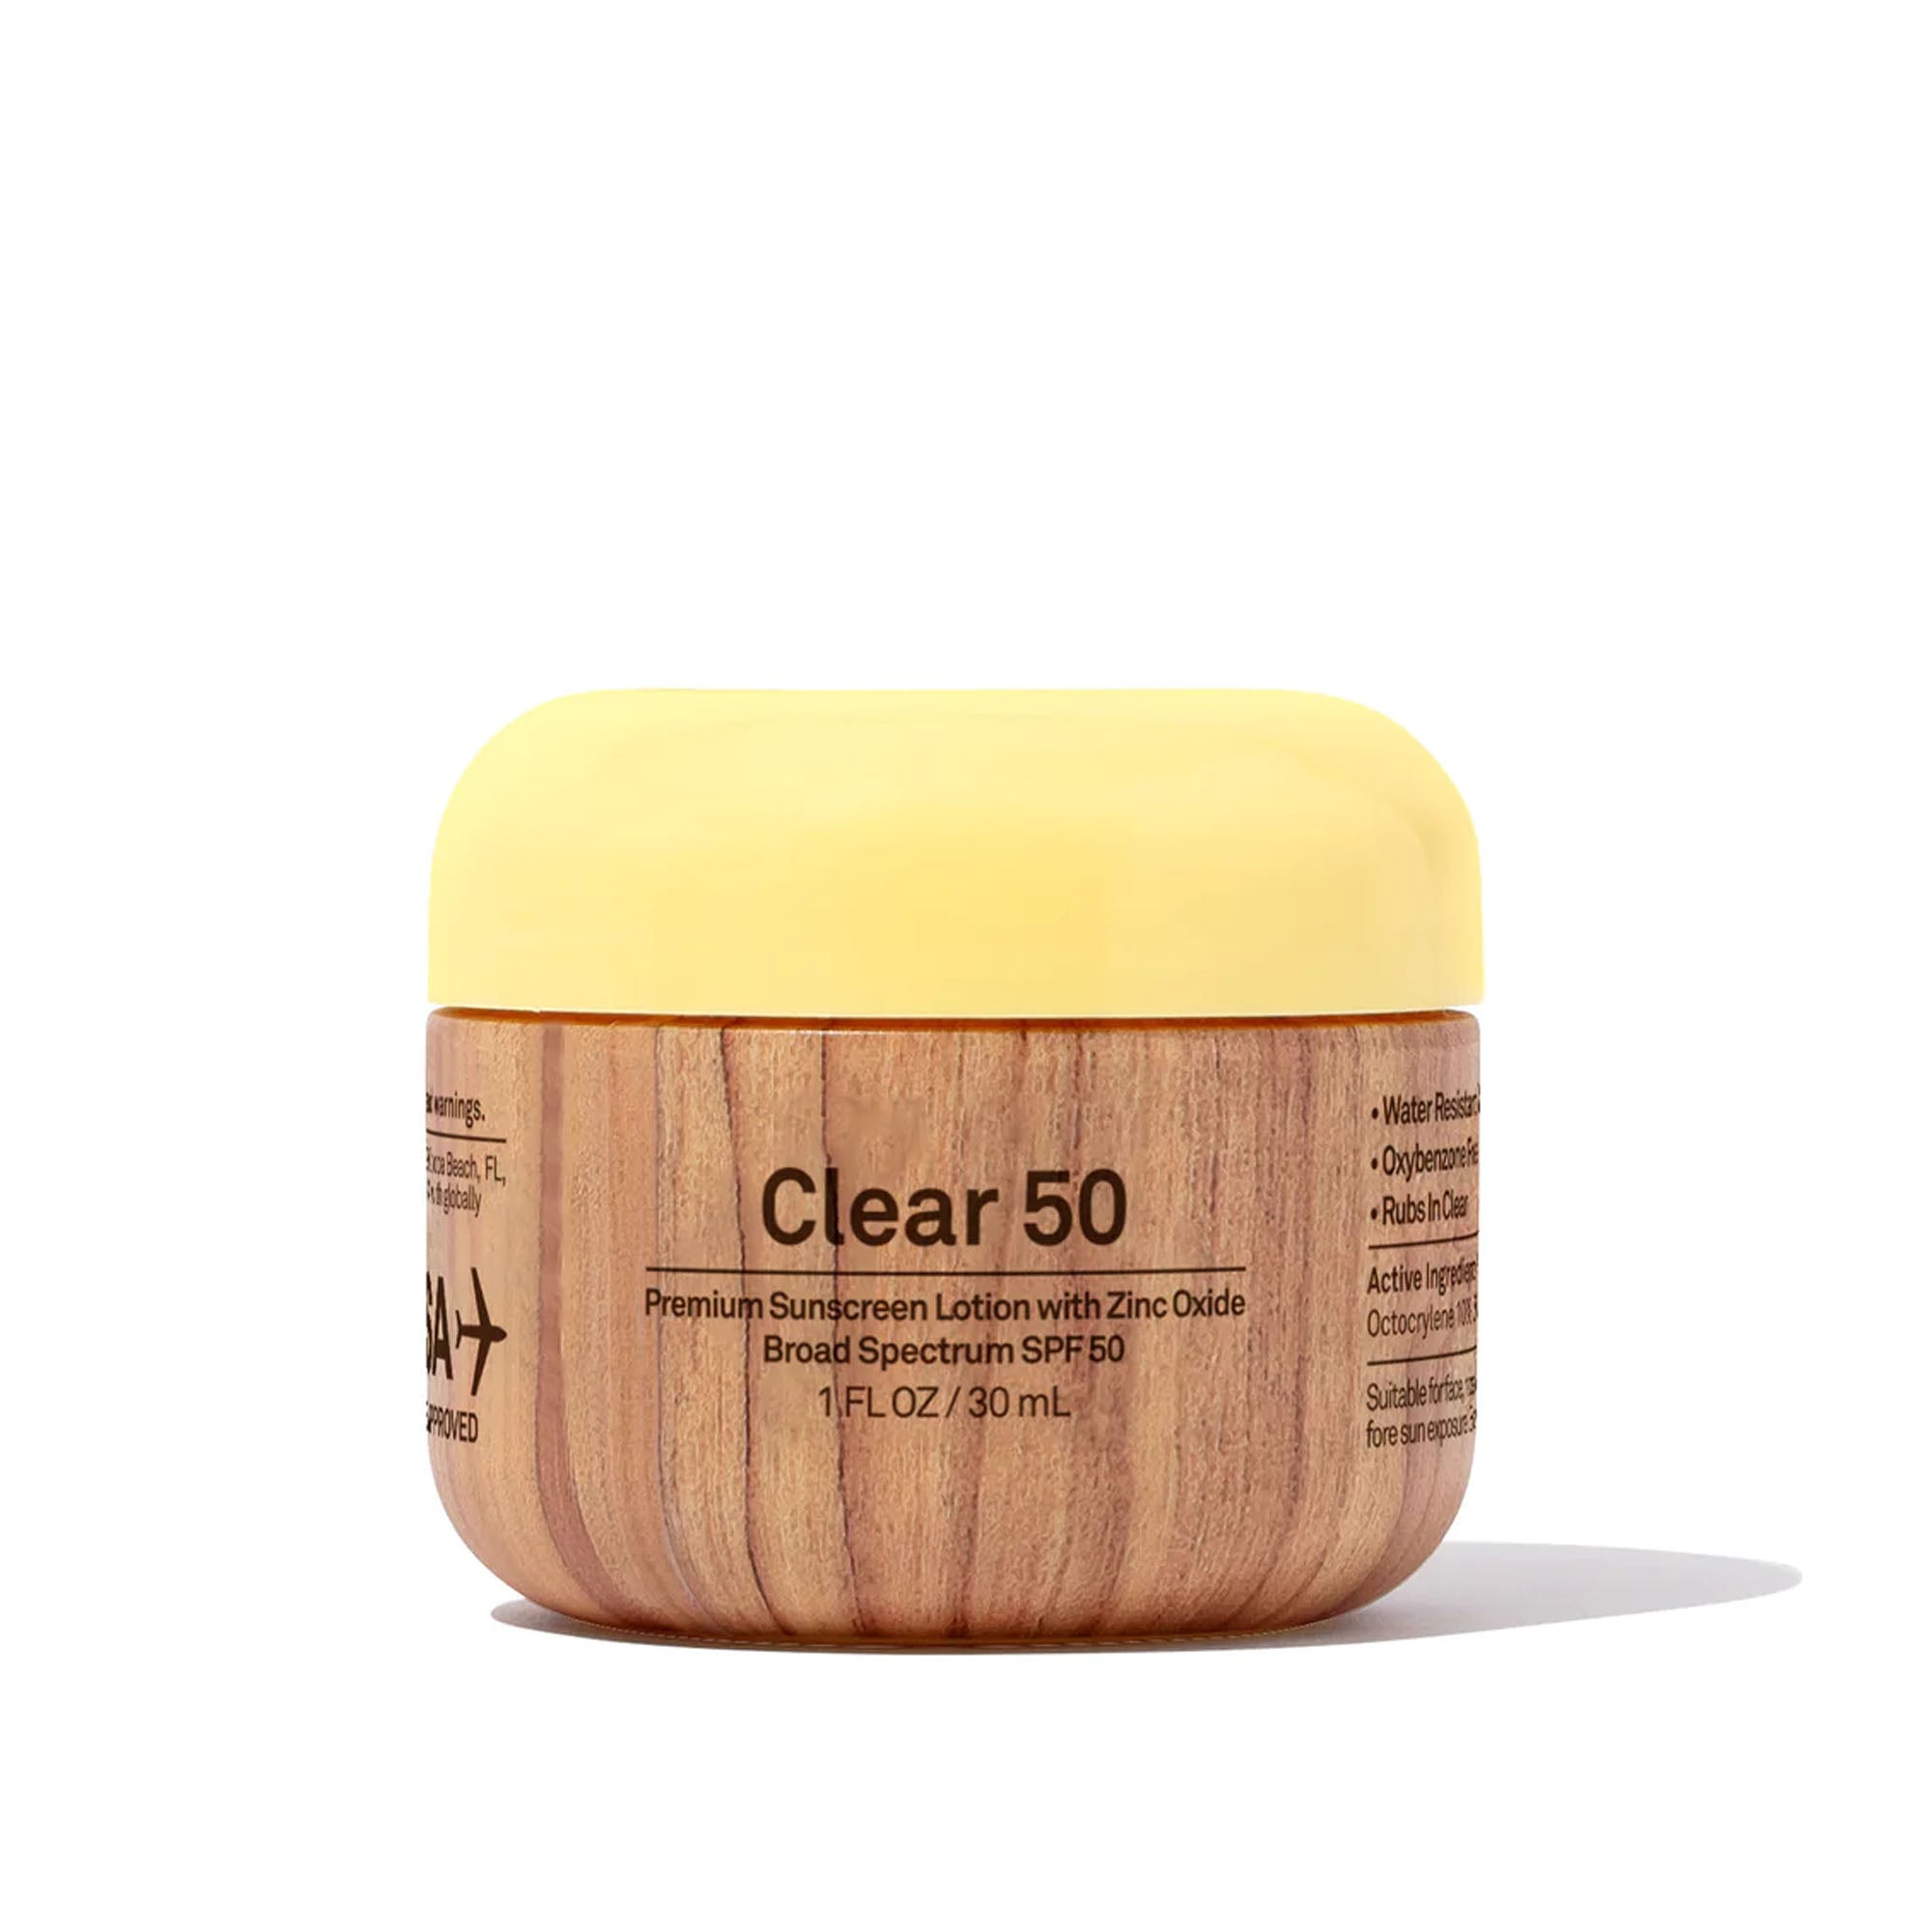 Sun Bum Original SPF 50 Clear Face Lotion Sunscreen